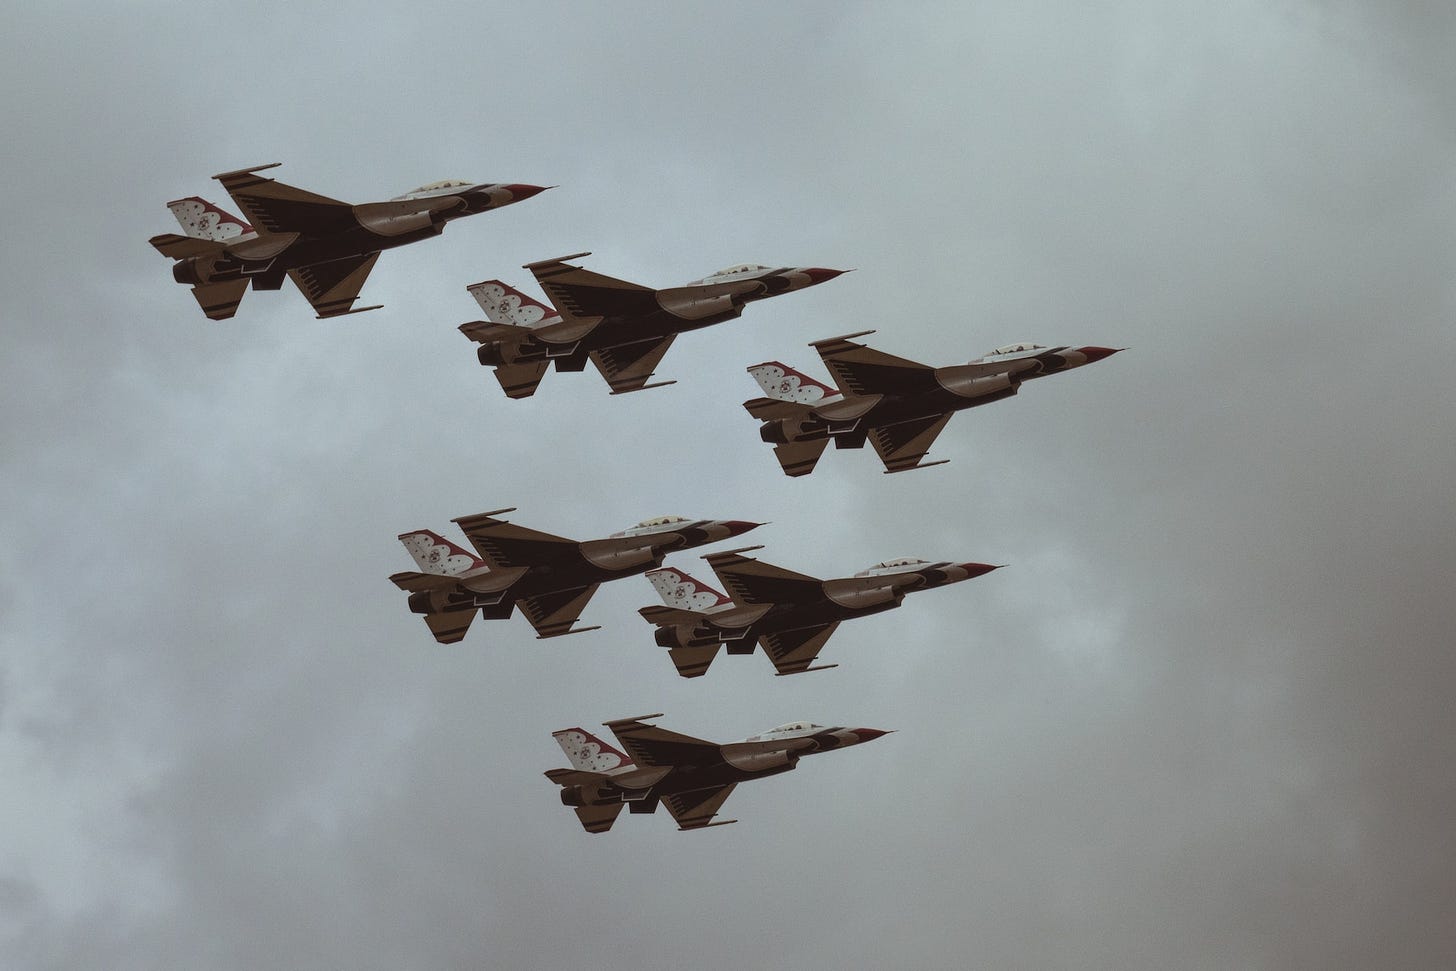 USAF Thunderbirds in formation